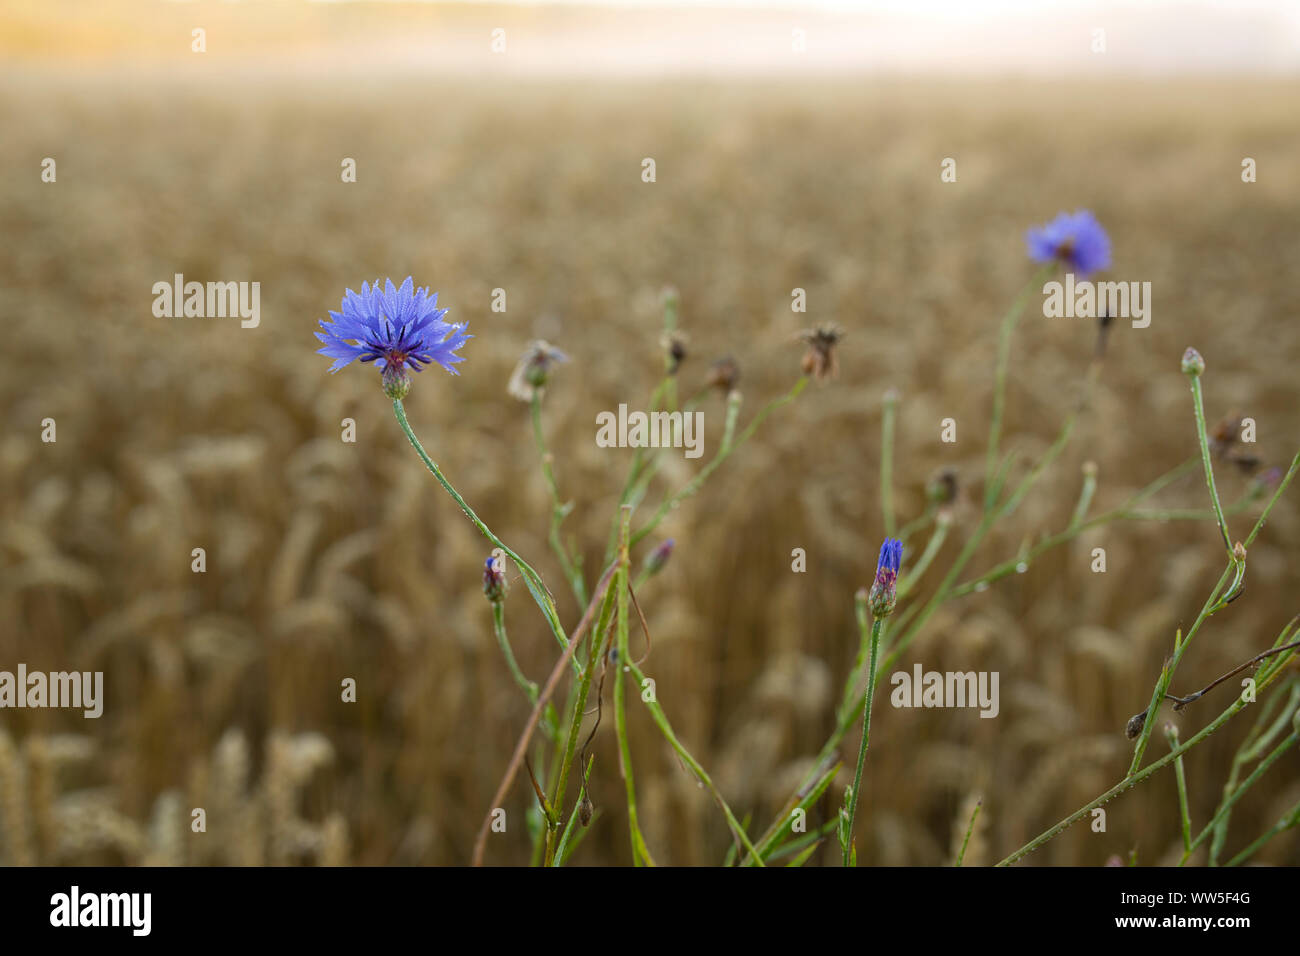 Grain field with blue cornflowers Stock Photo